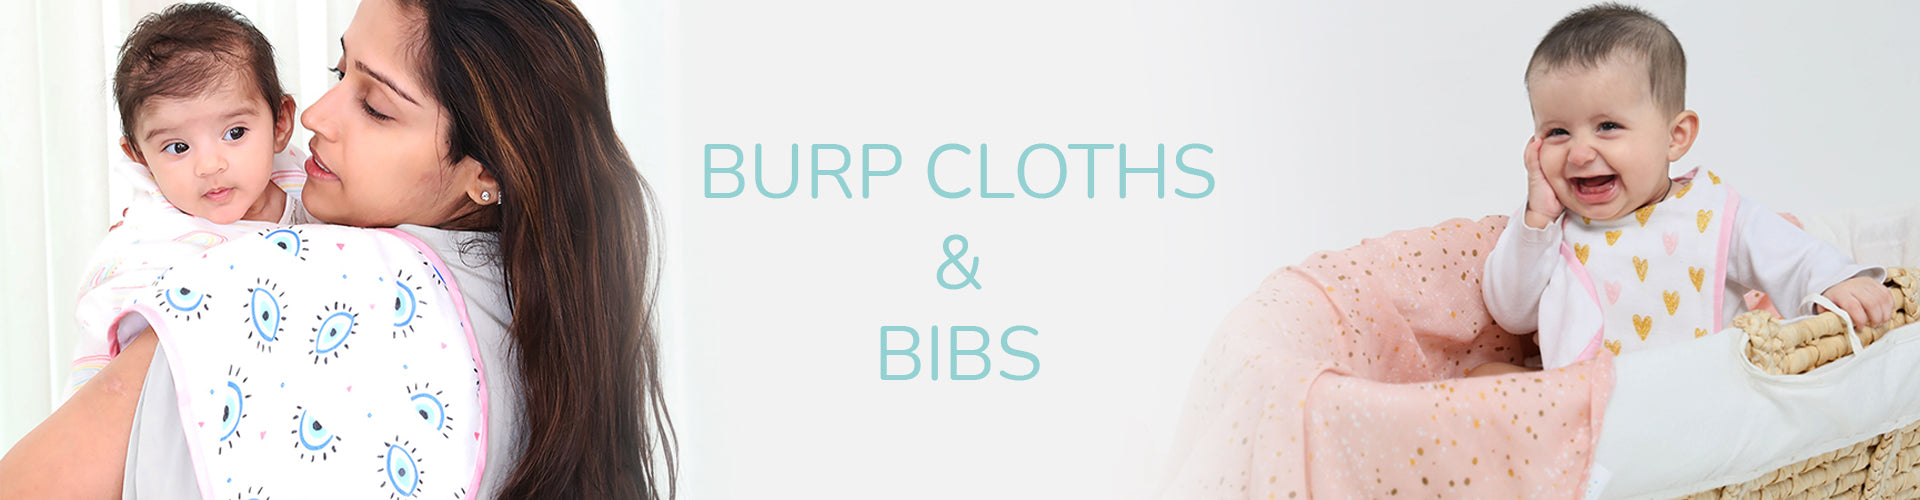 Burp and Bib Cloths